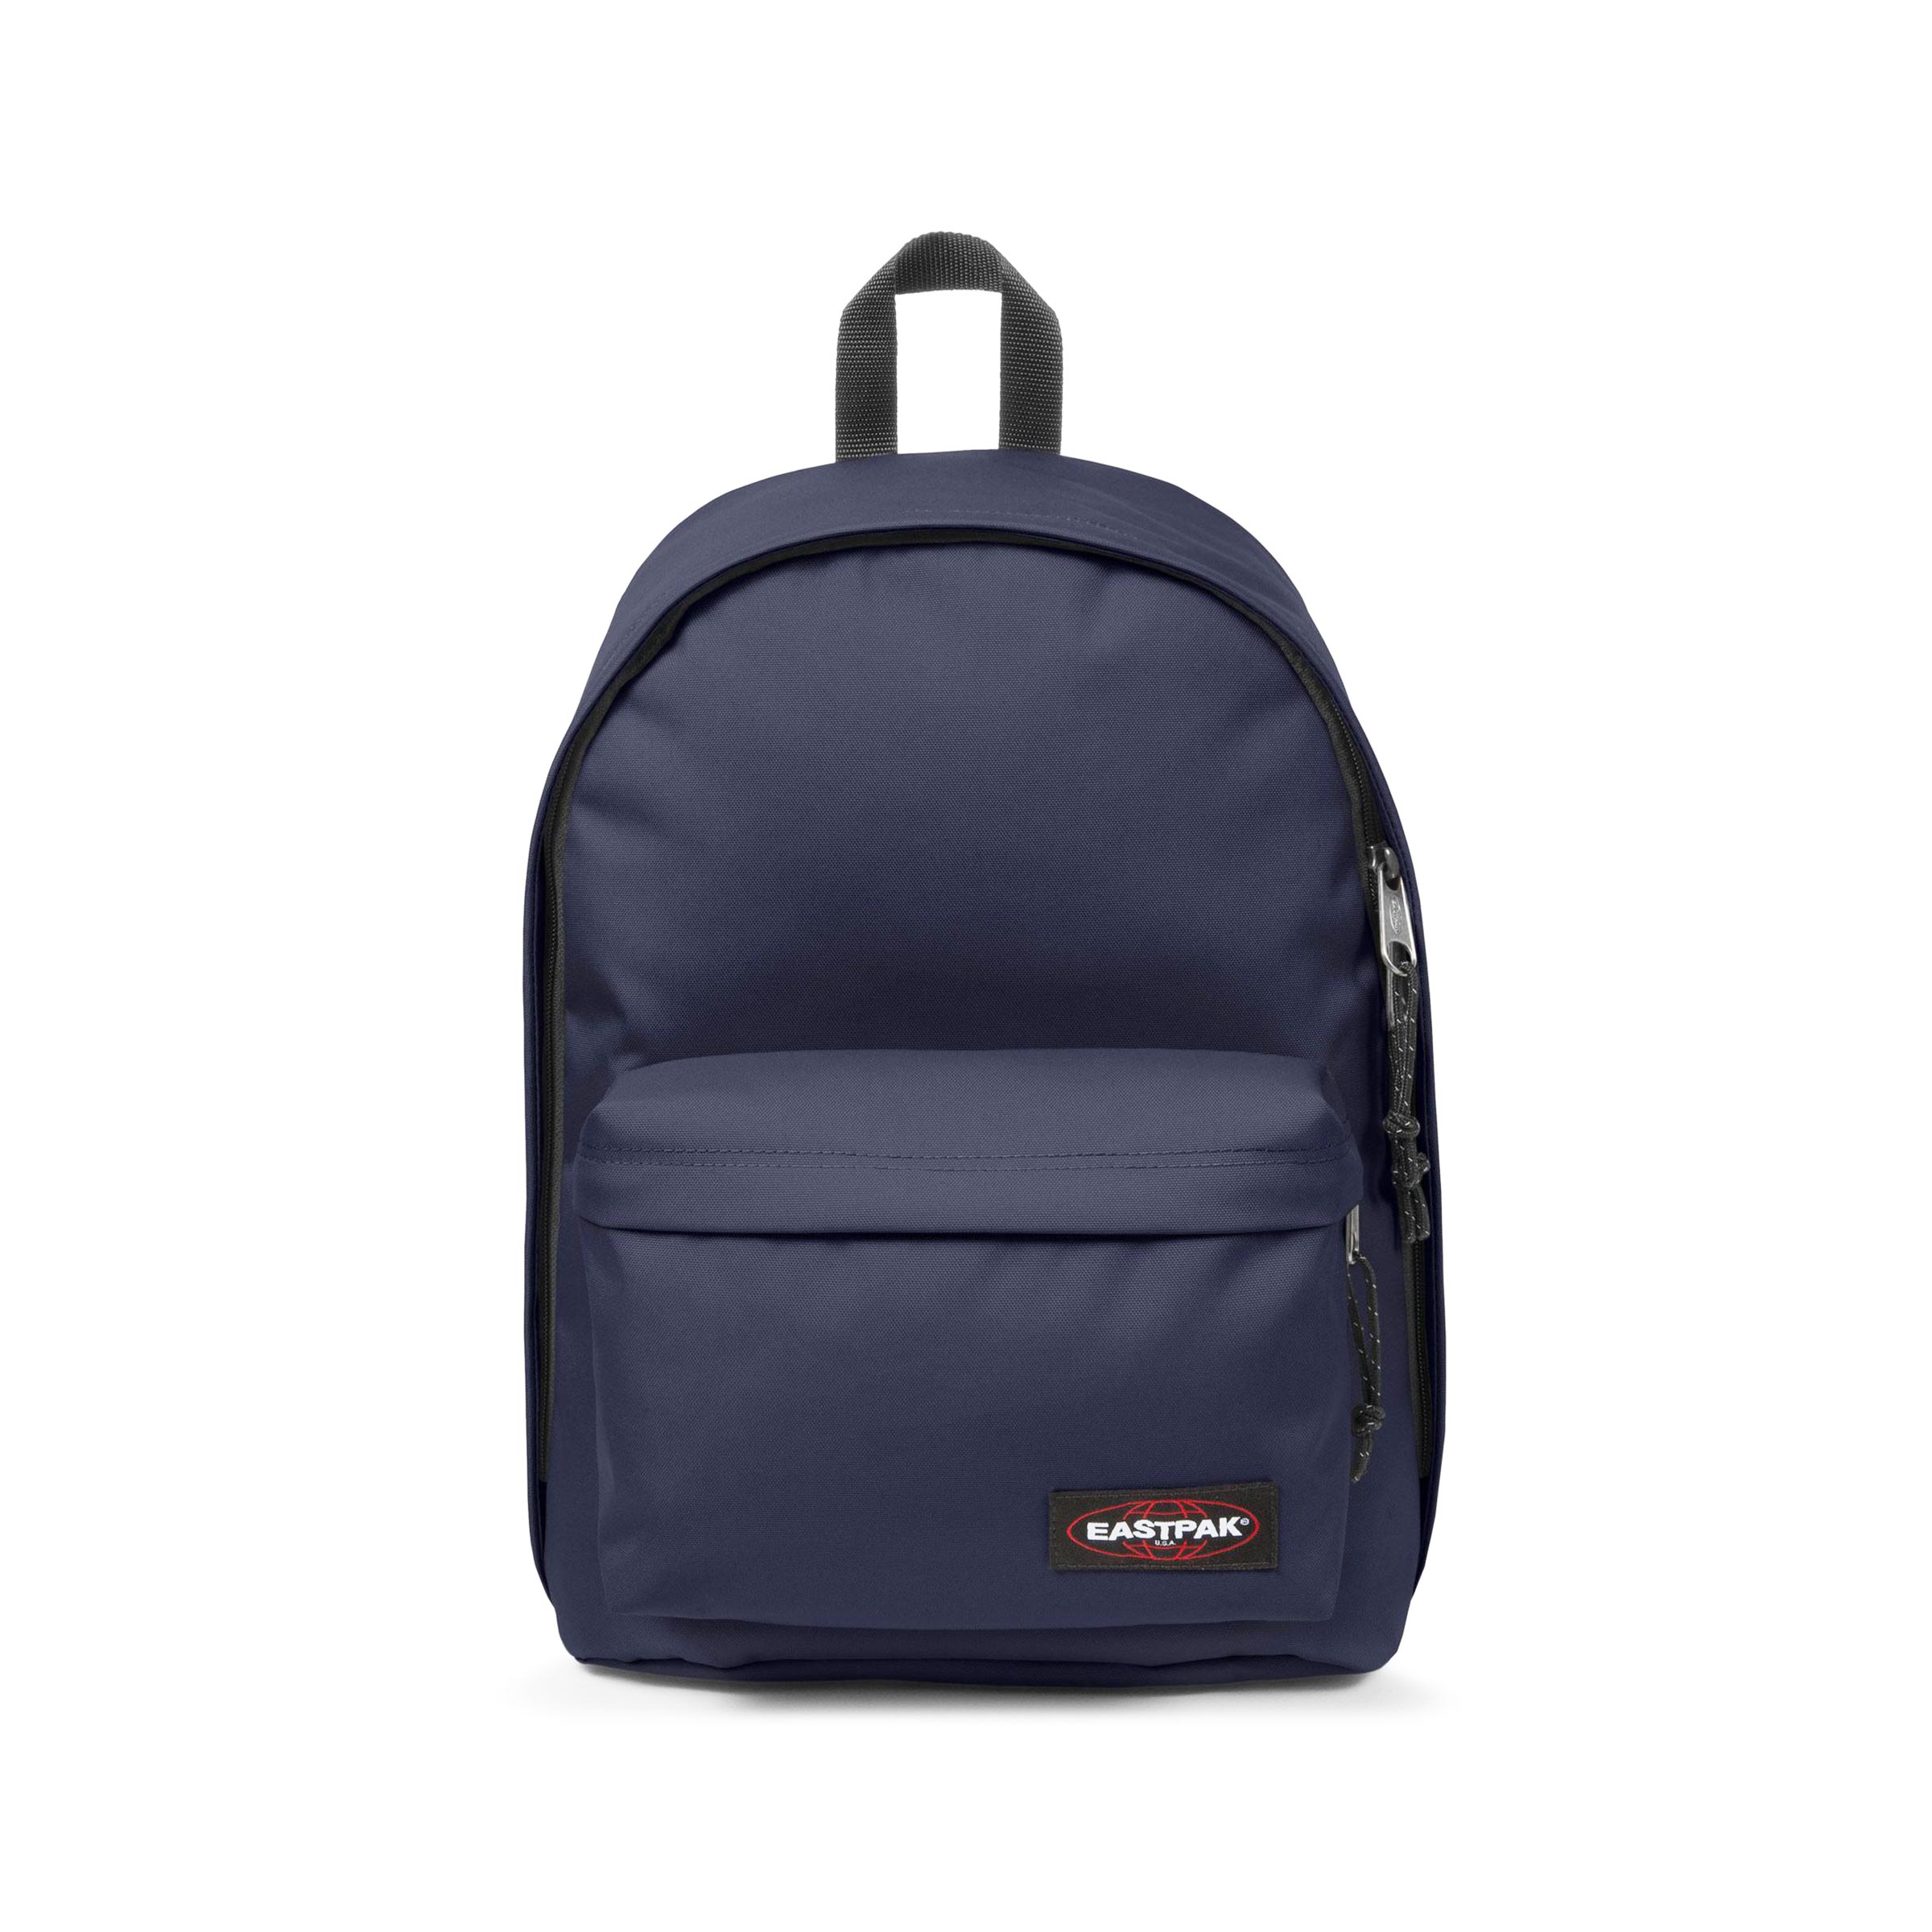 Backpack Unisex Eastpak Out Of Office | eBay